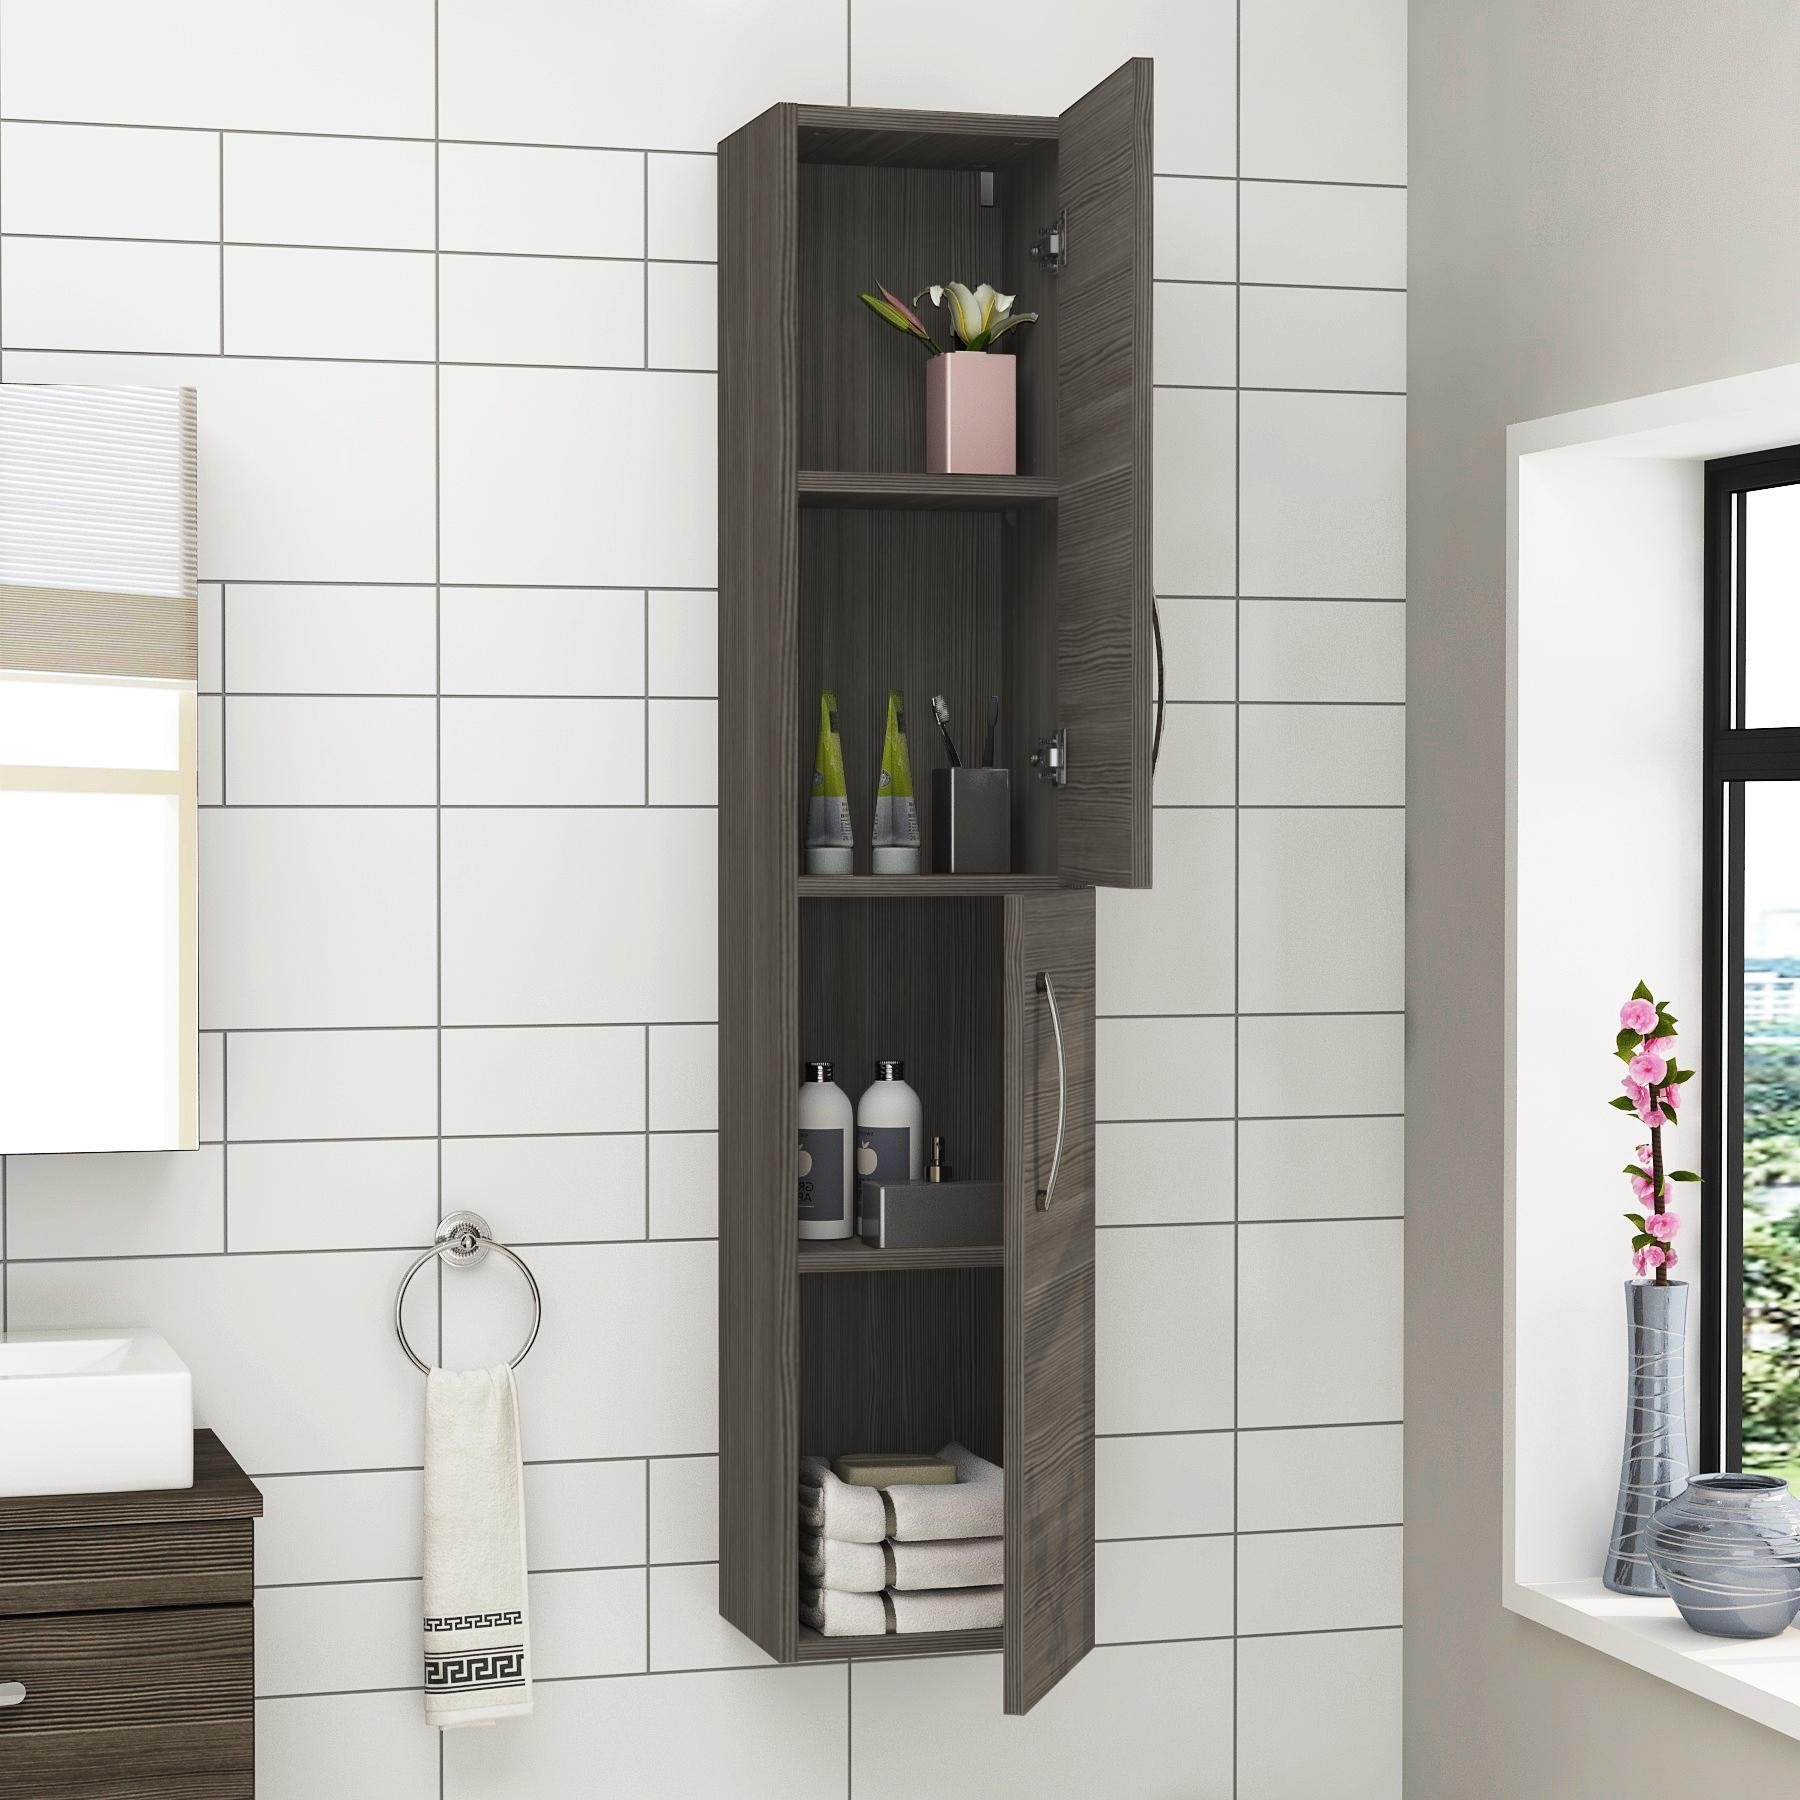 DIY Installation: How to Install Your Tallboy Bathroom Cabinet